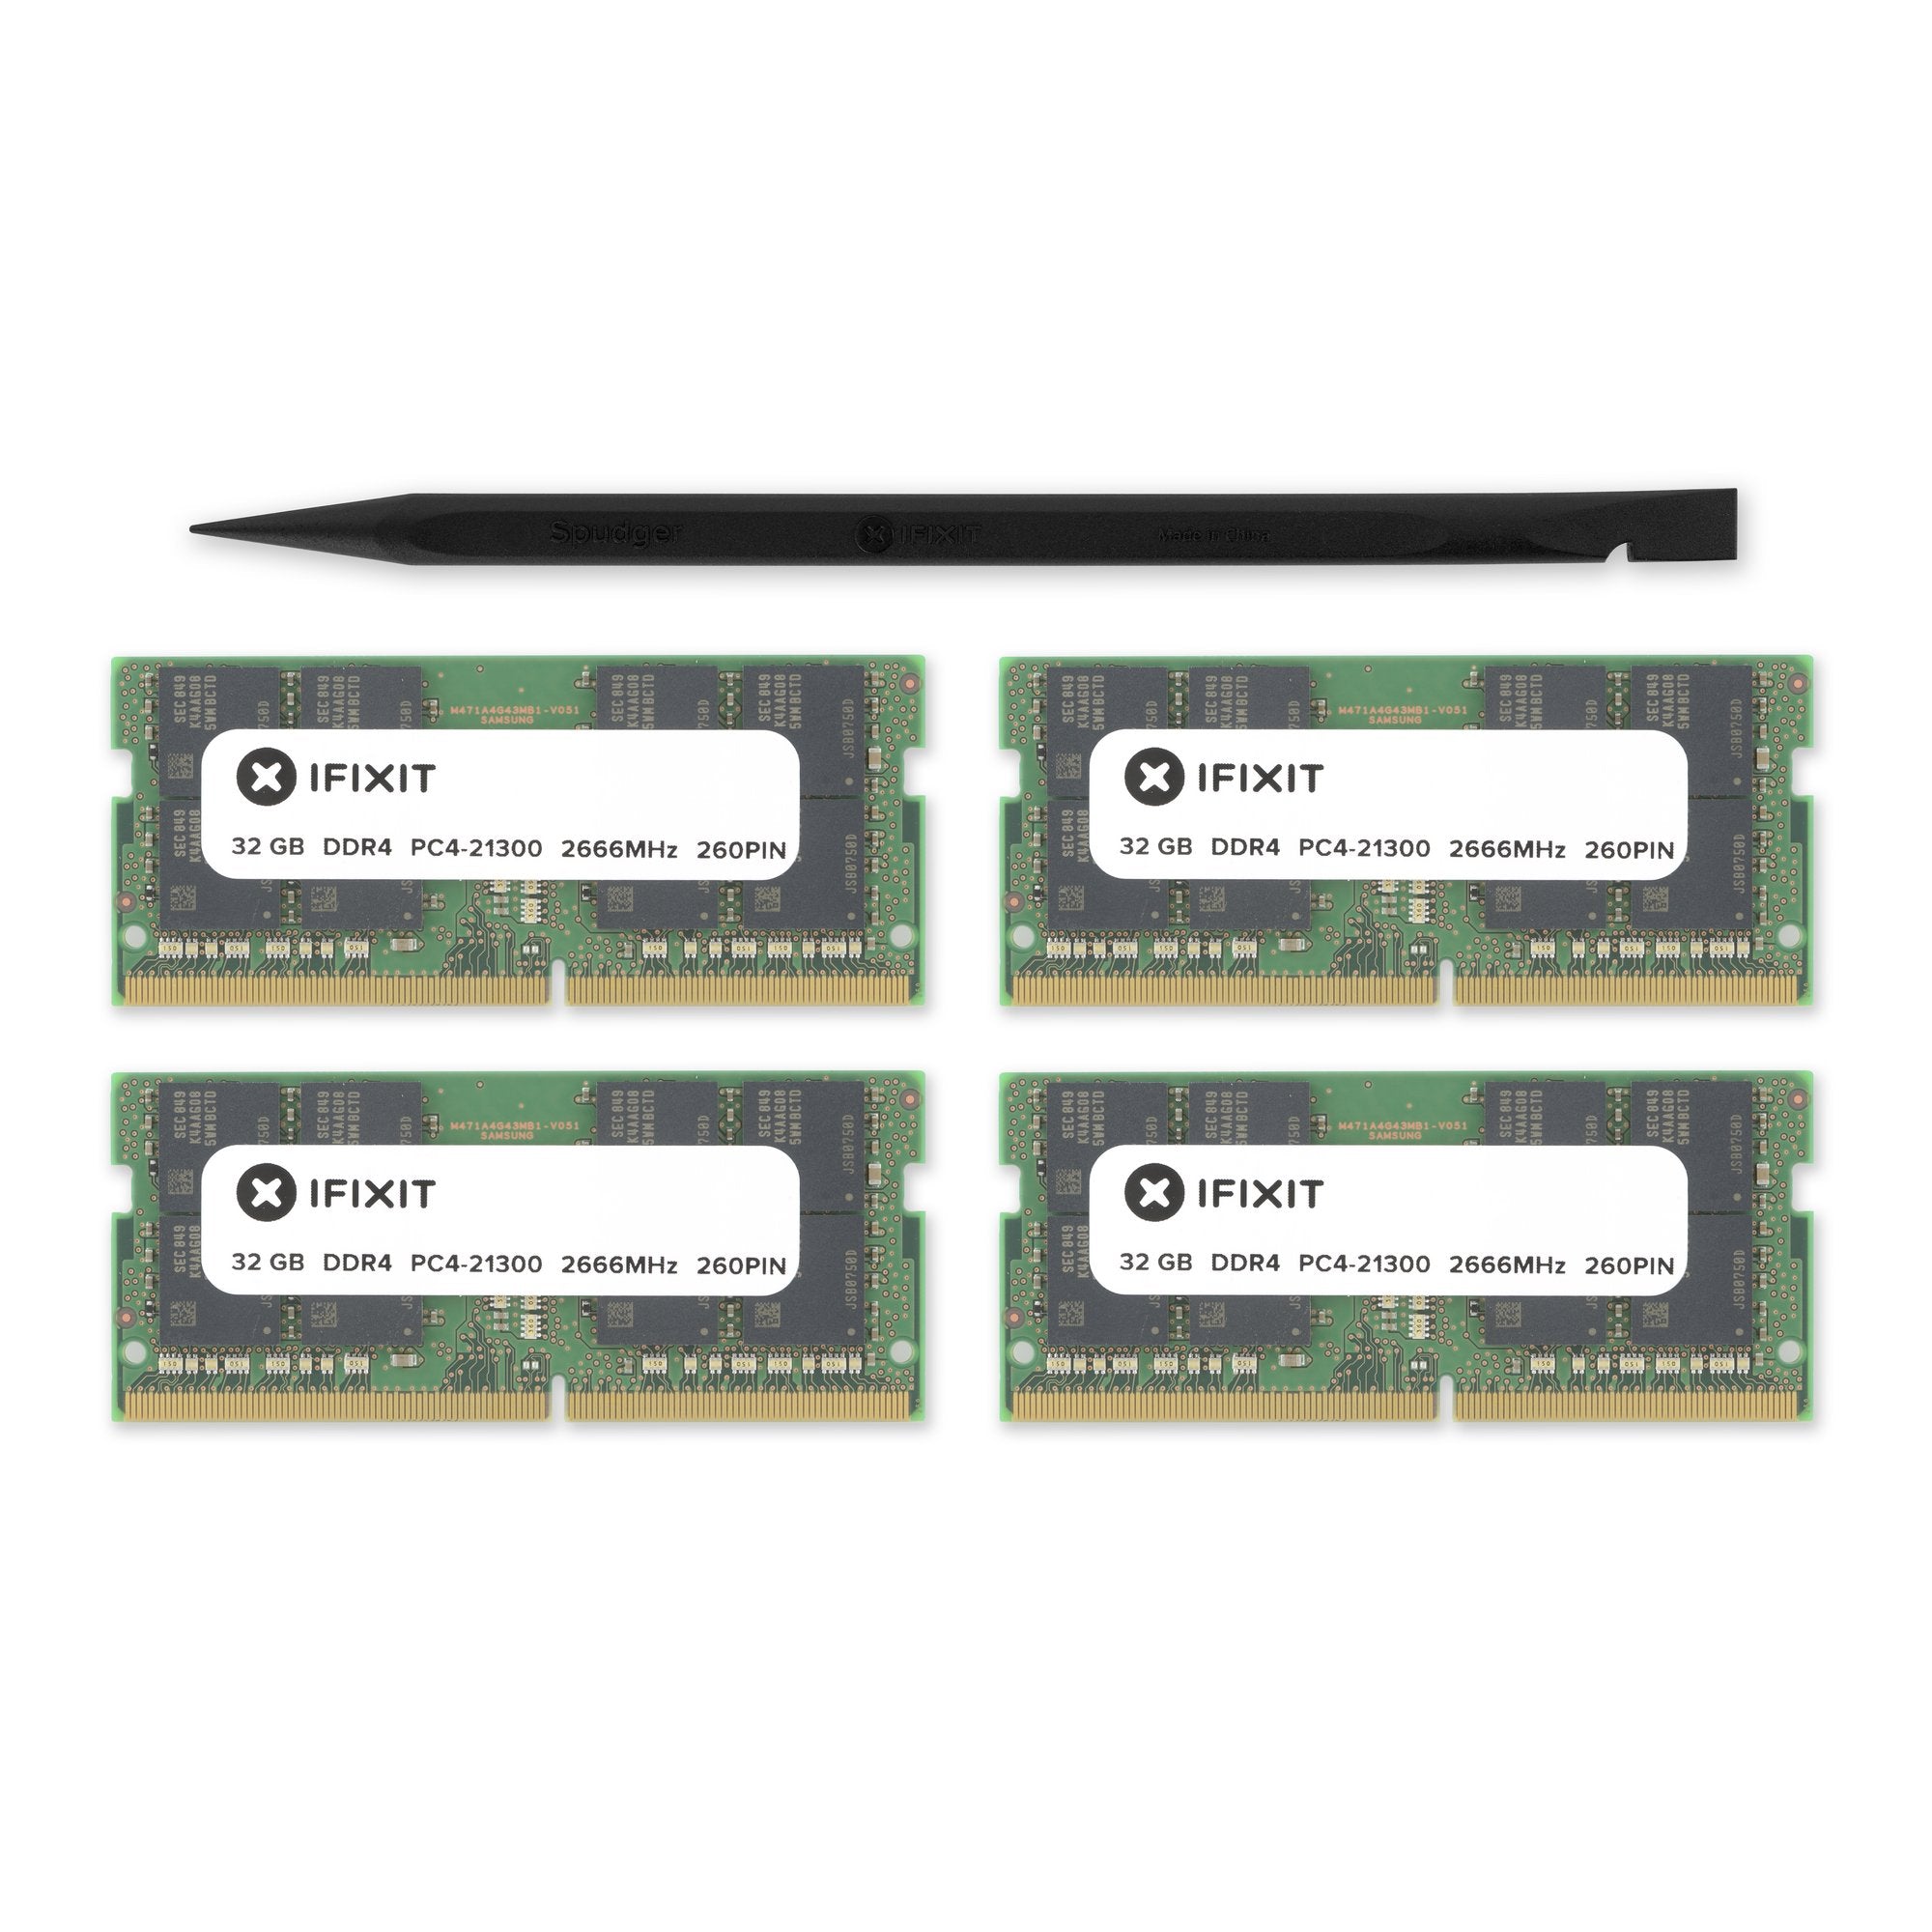 iMac Intel 27" EMC 3442 (2020, 5K Display) Memory Maxxer RAM Upgrade Kit New